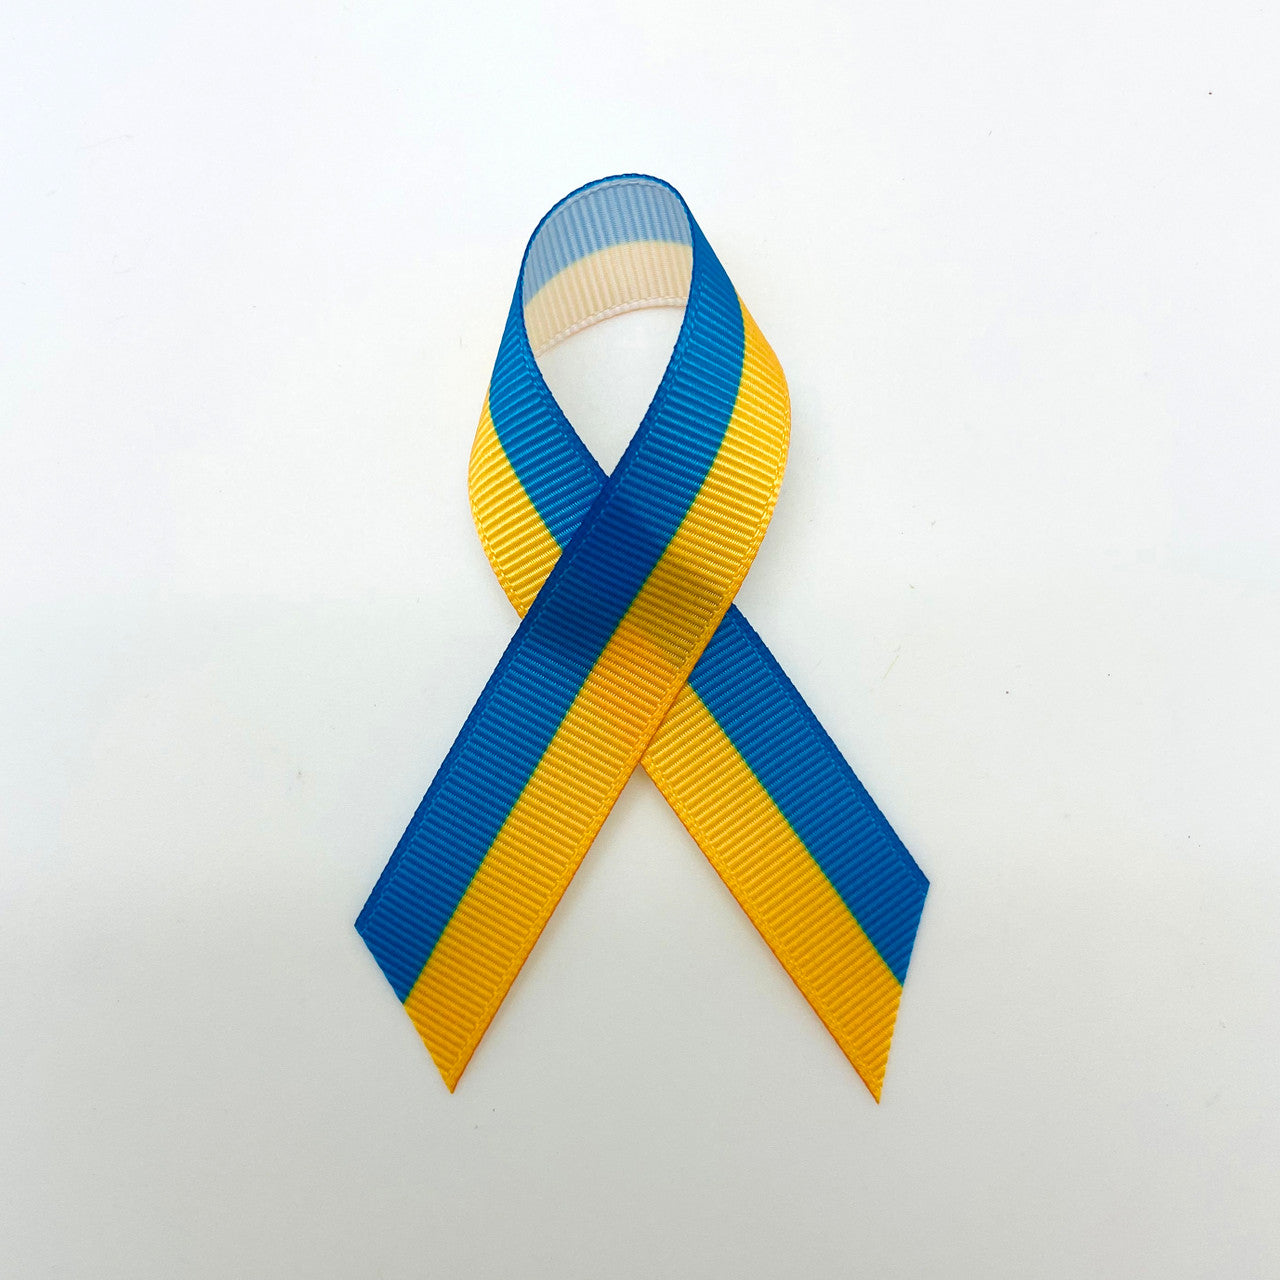 Yellow Awareness Ribbons | Lapel Pins